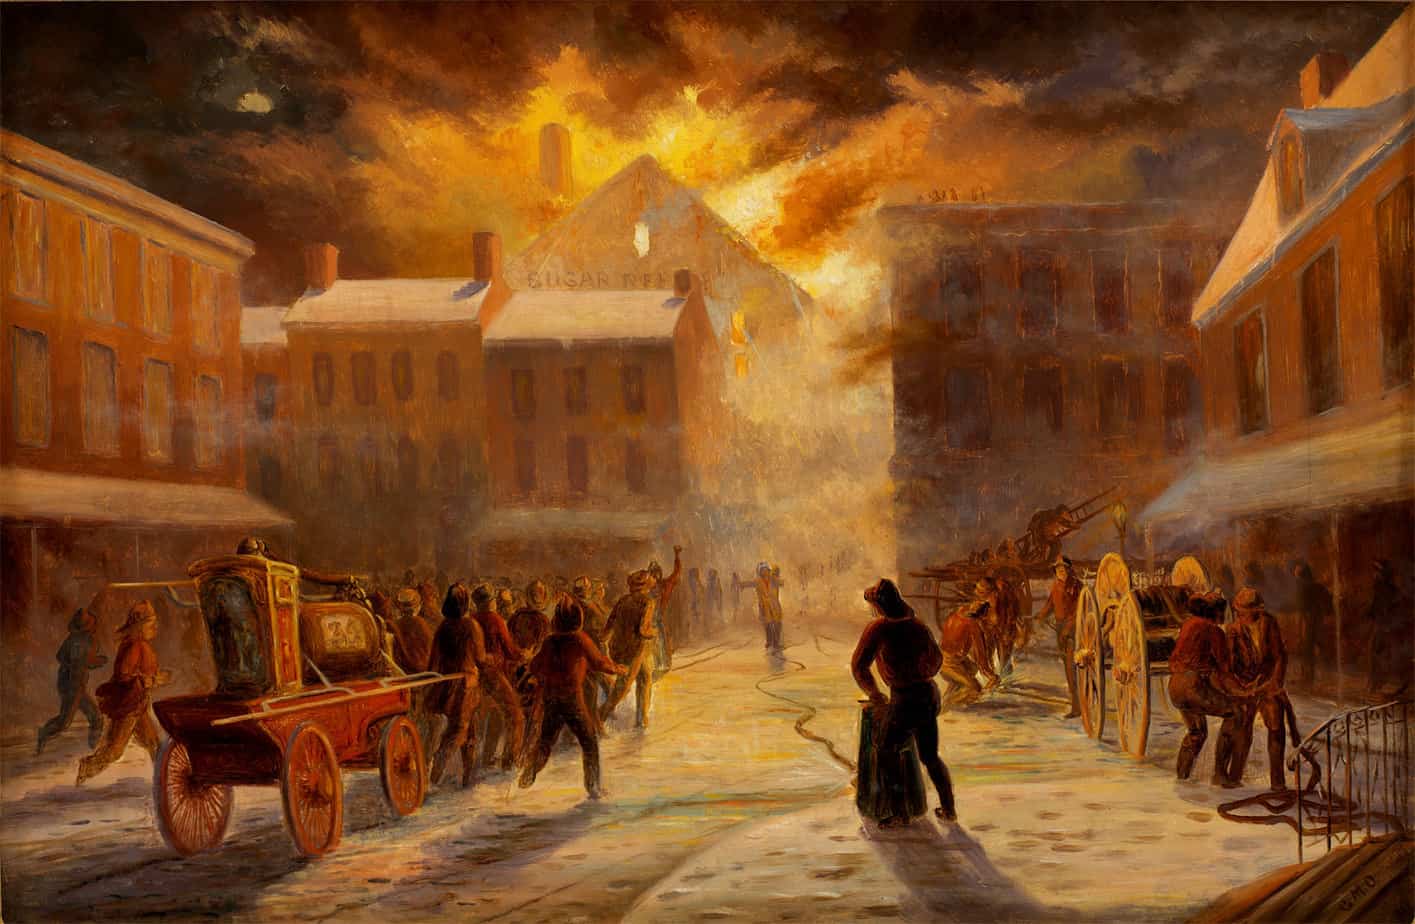 George Martin Ottinger - Sugar Refinery Burning 1885 fire